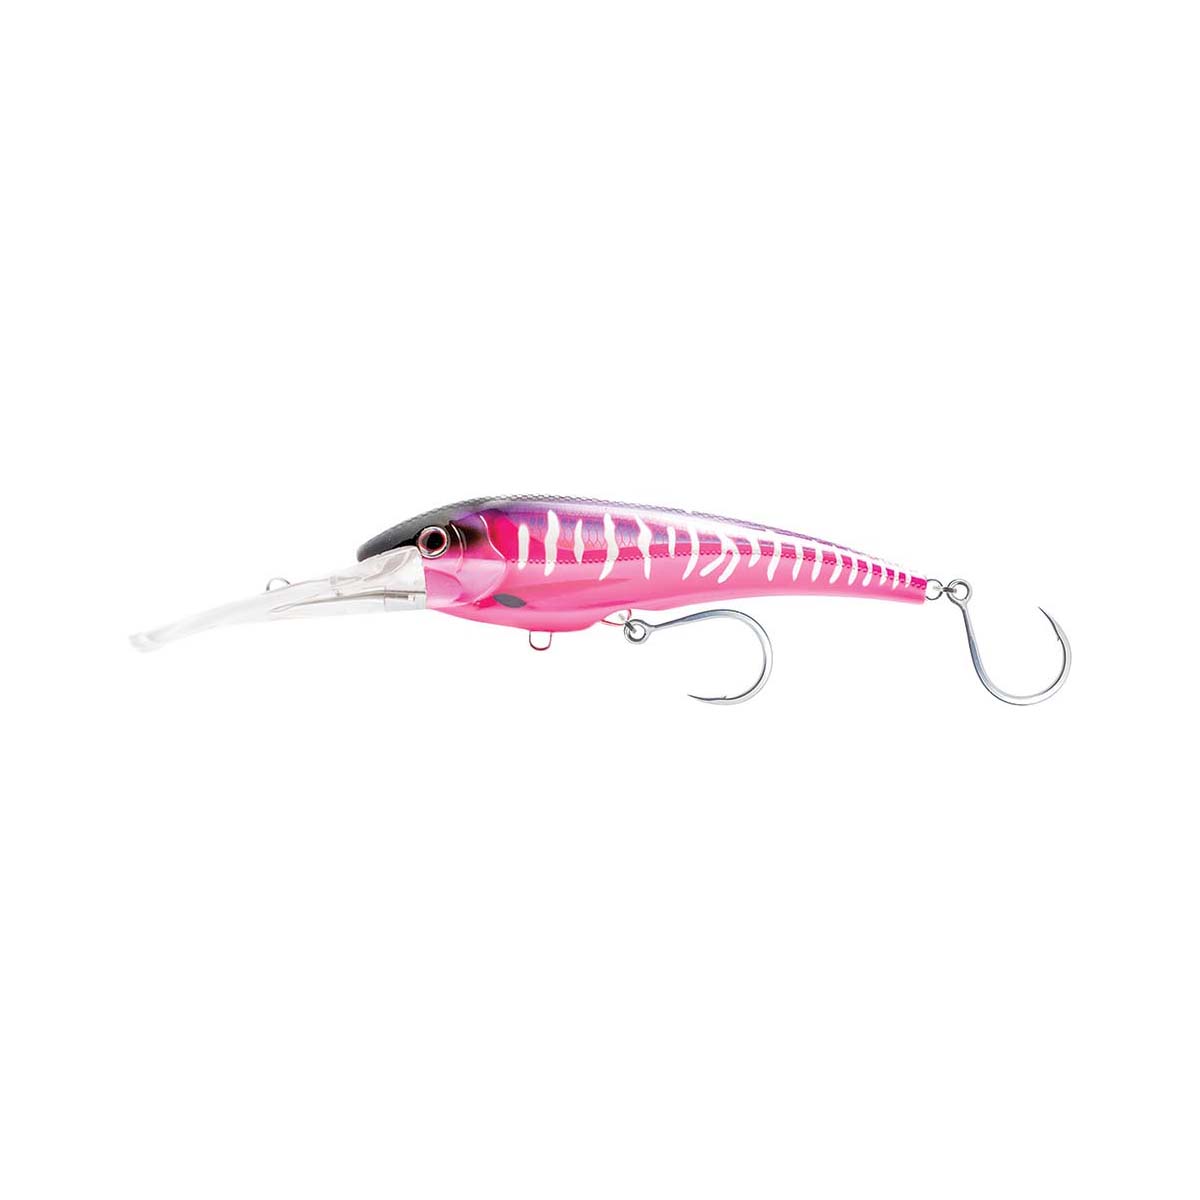 Nomad DTX Minnow Hard Body Lure 20cm S Hot Pink Mackerel @ Club BCF